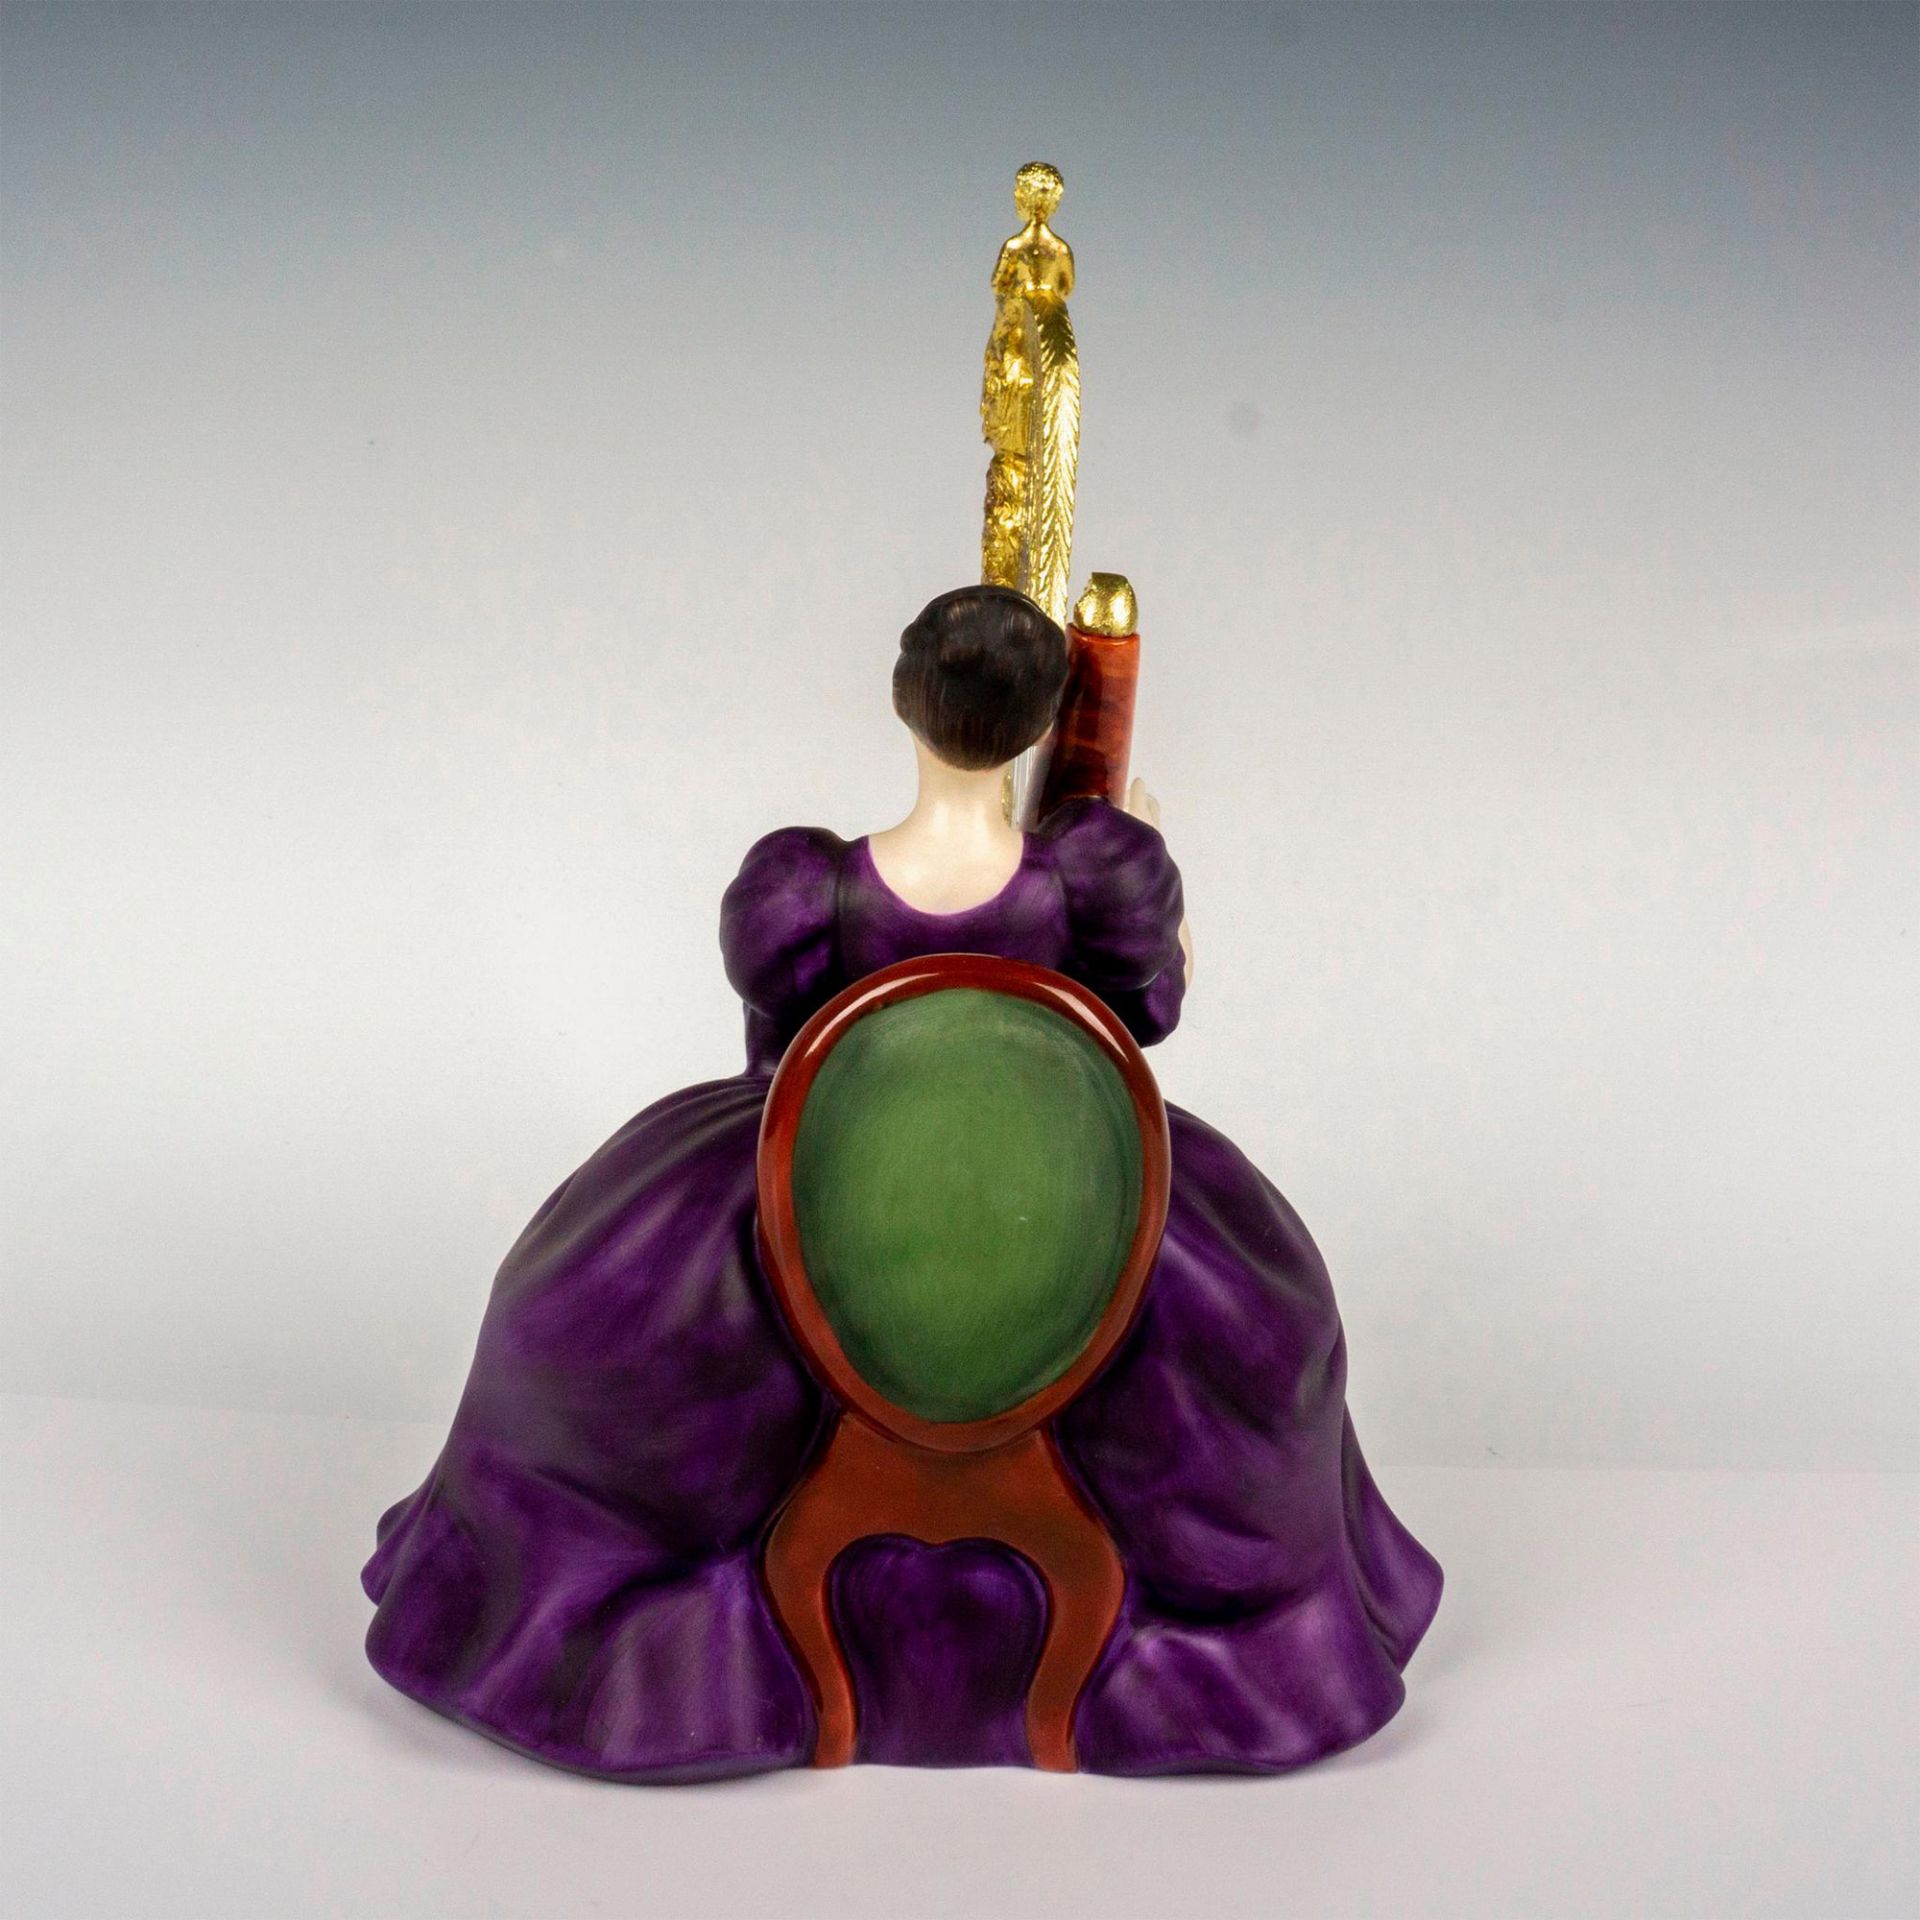 Harp HN2482 - Royal Doulton Figurine - Image 2 of 4